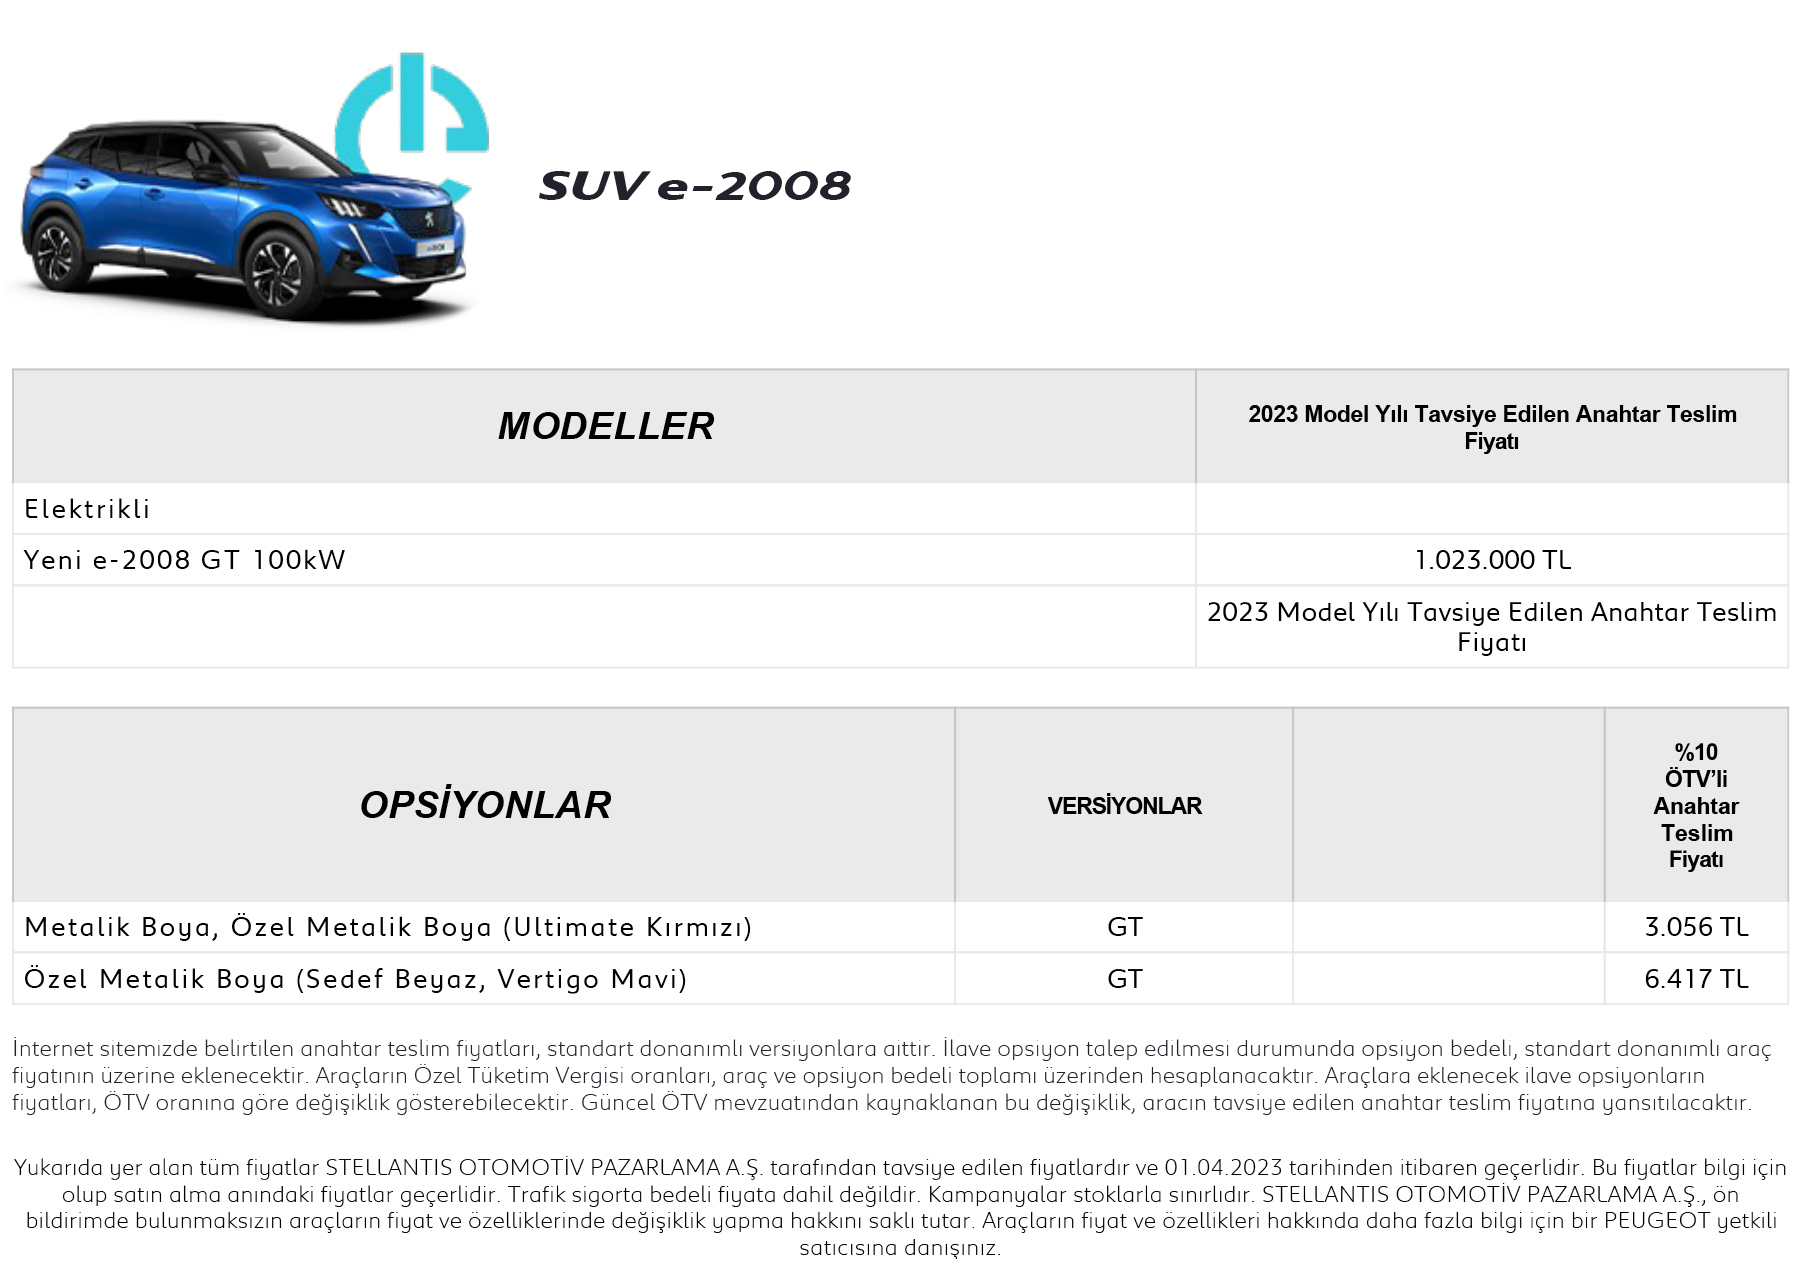 Peugeot SUV e-2008 Fiyat Listesi